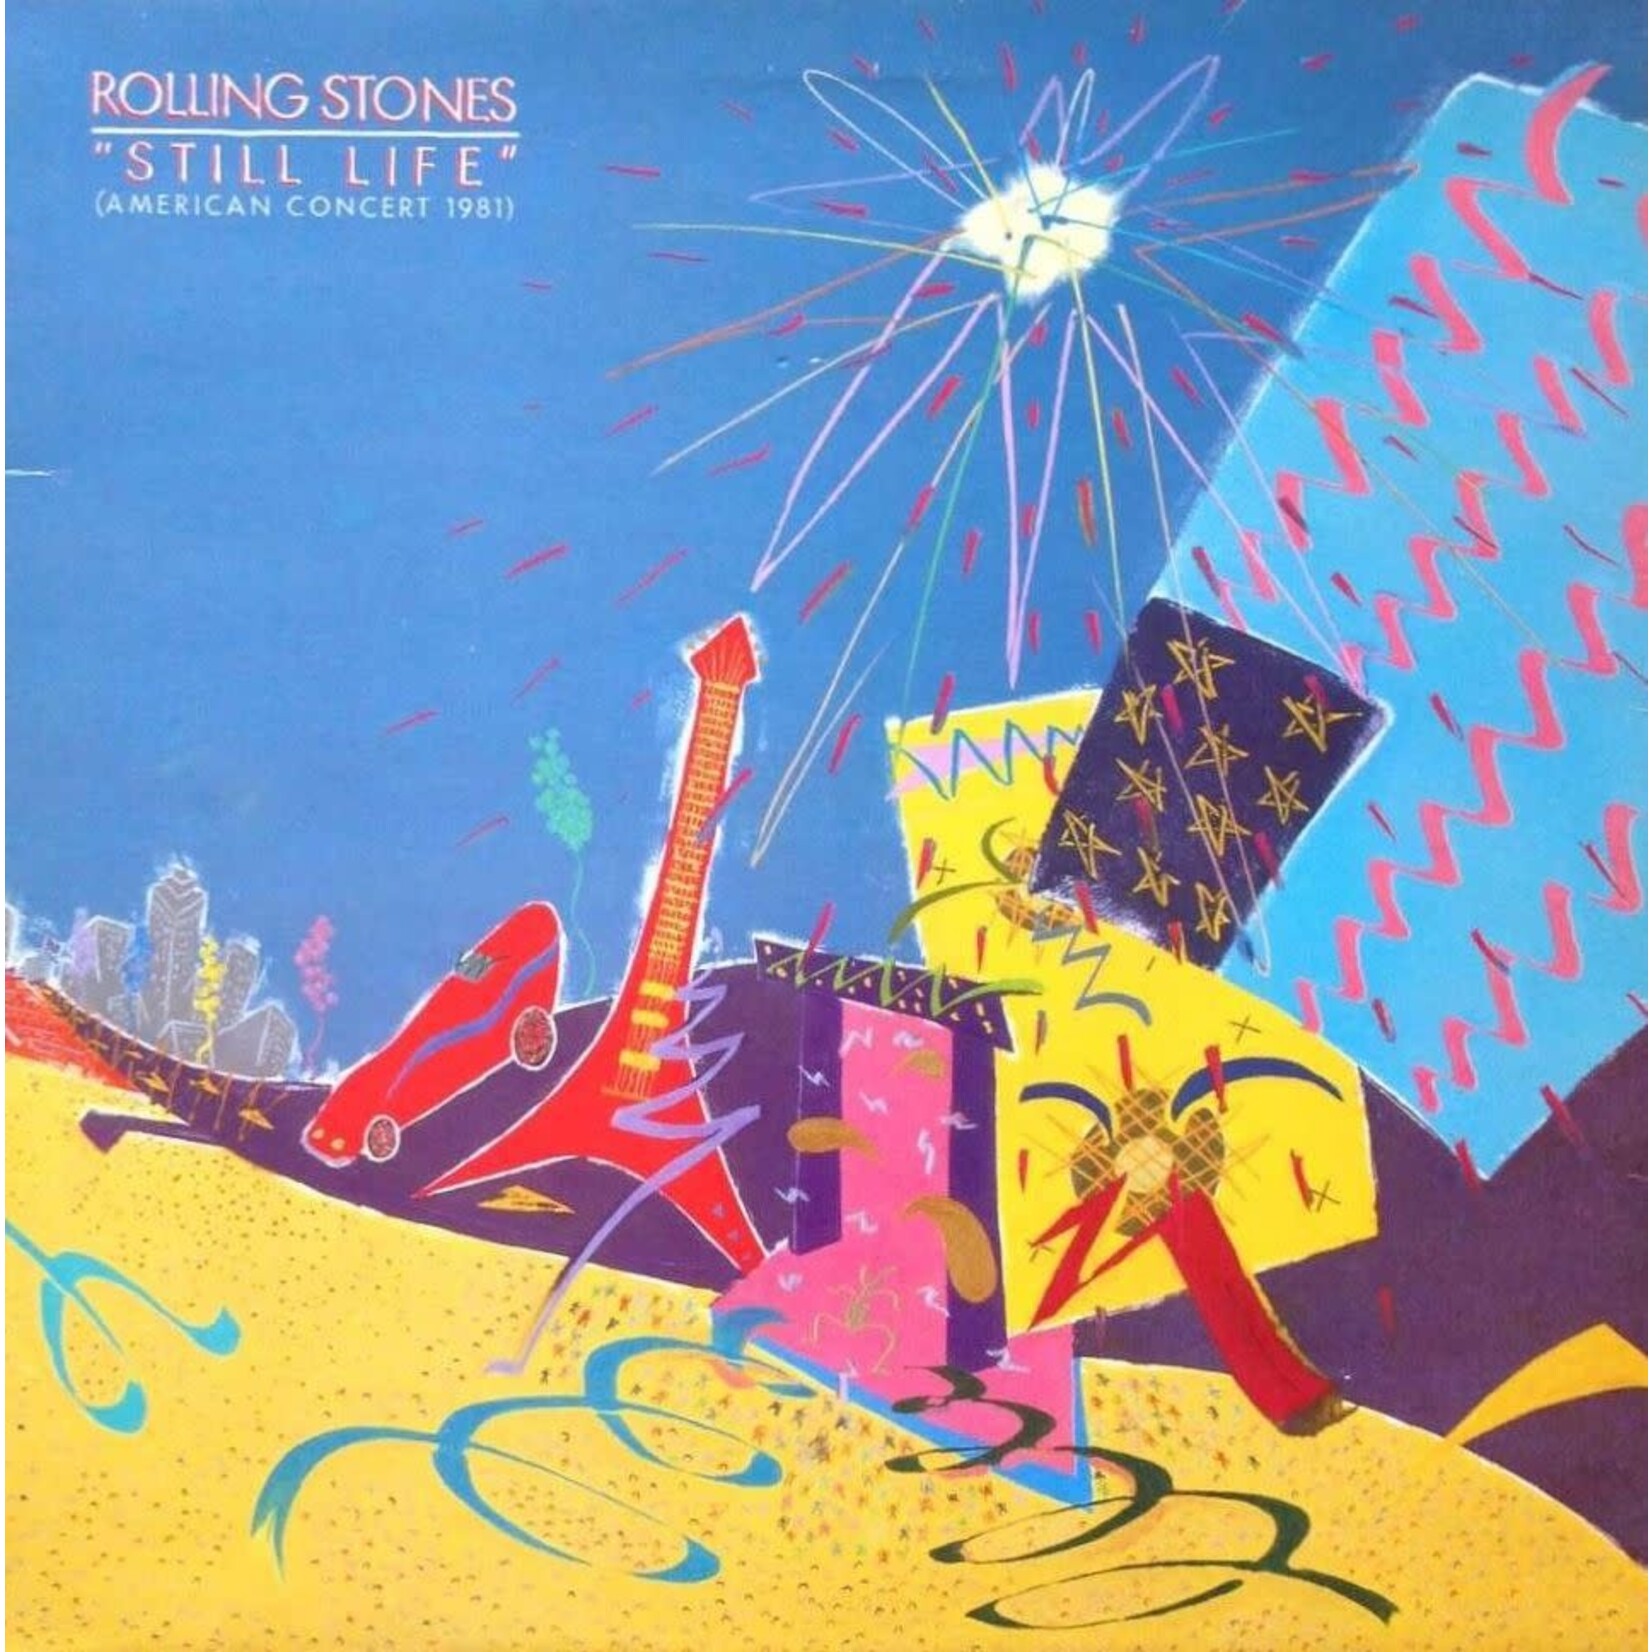 [Vintage] Rolling Stones - Still Life (American Concert 1981)